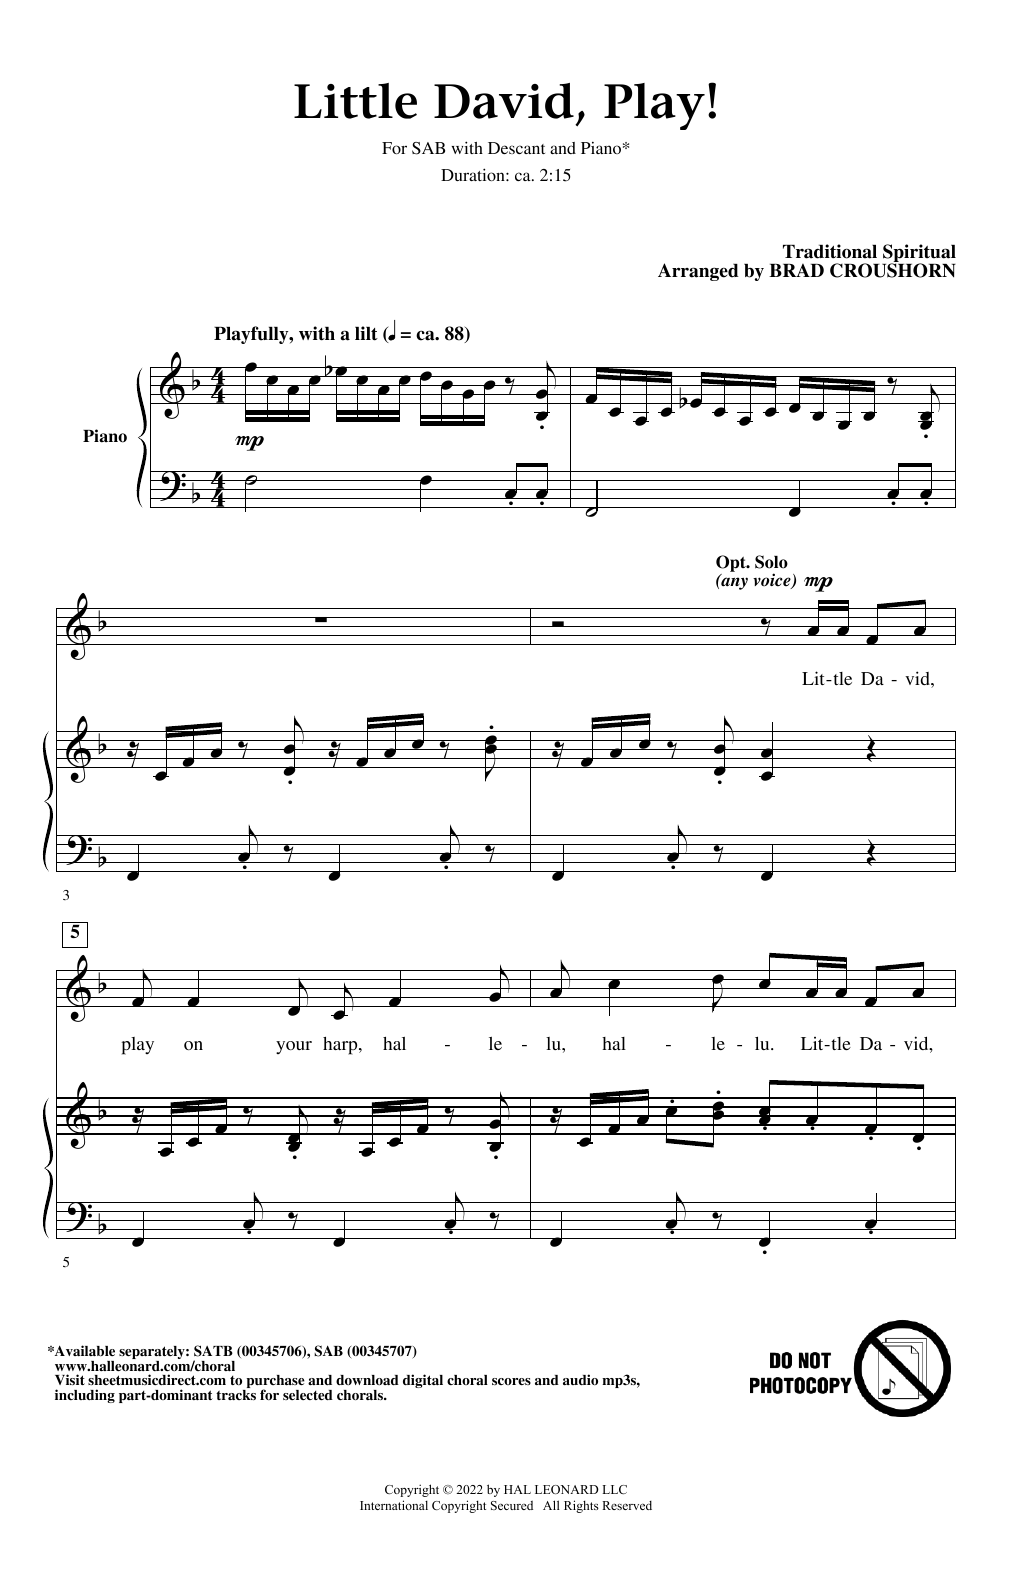 Traditional Spiritual Little David, Play! (arr. Brad Croushorn) sheet music notes and chords arranged for SATB Choir